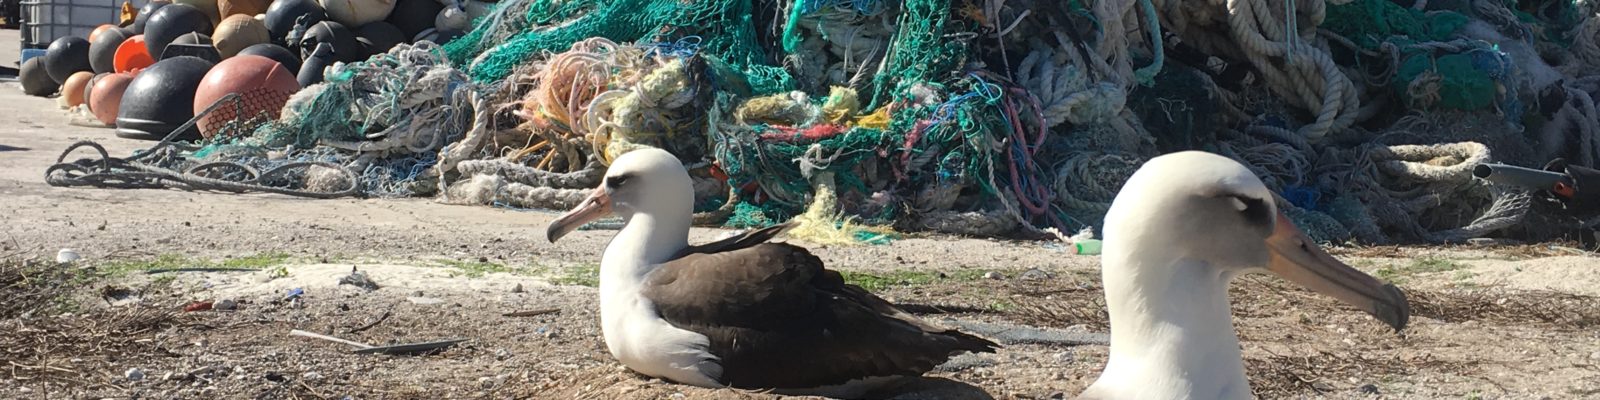 Save the Albatross Coalition